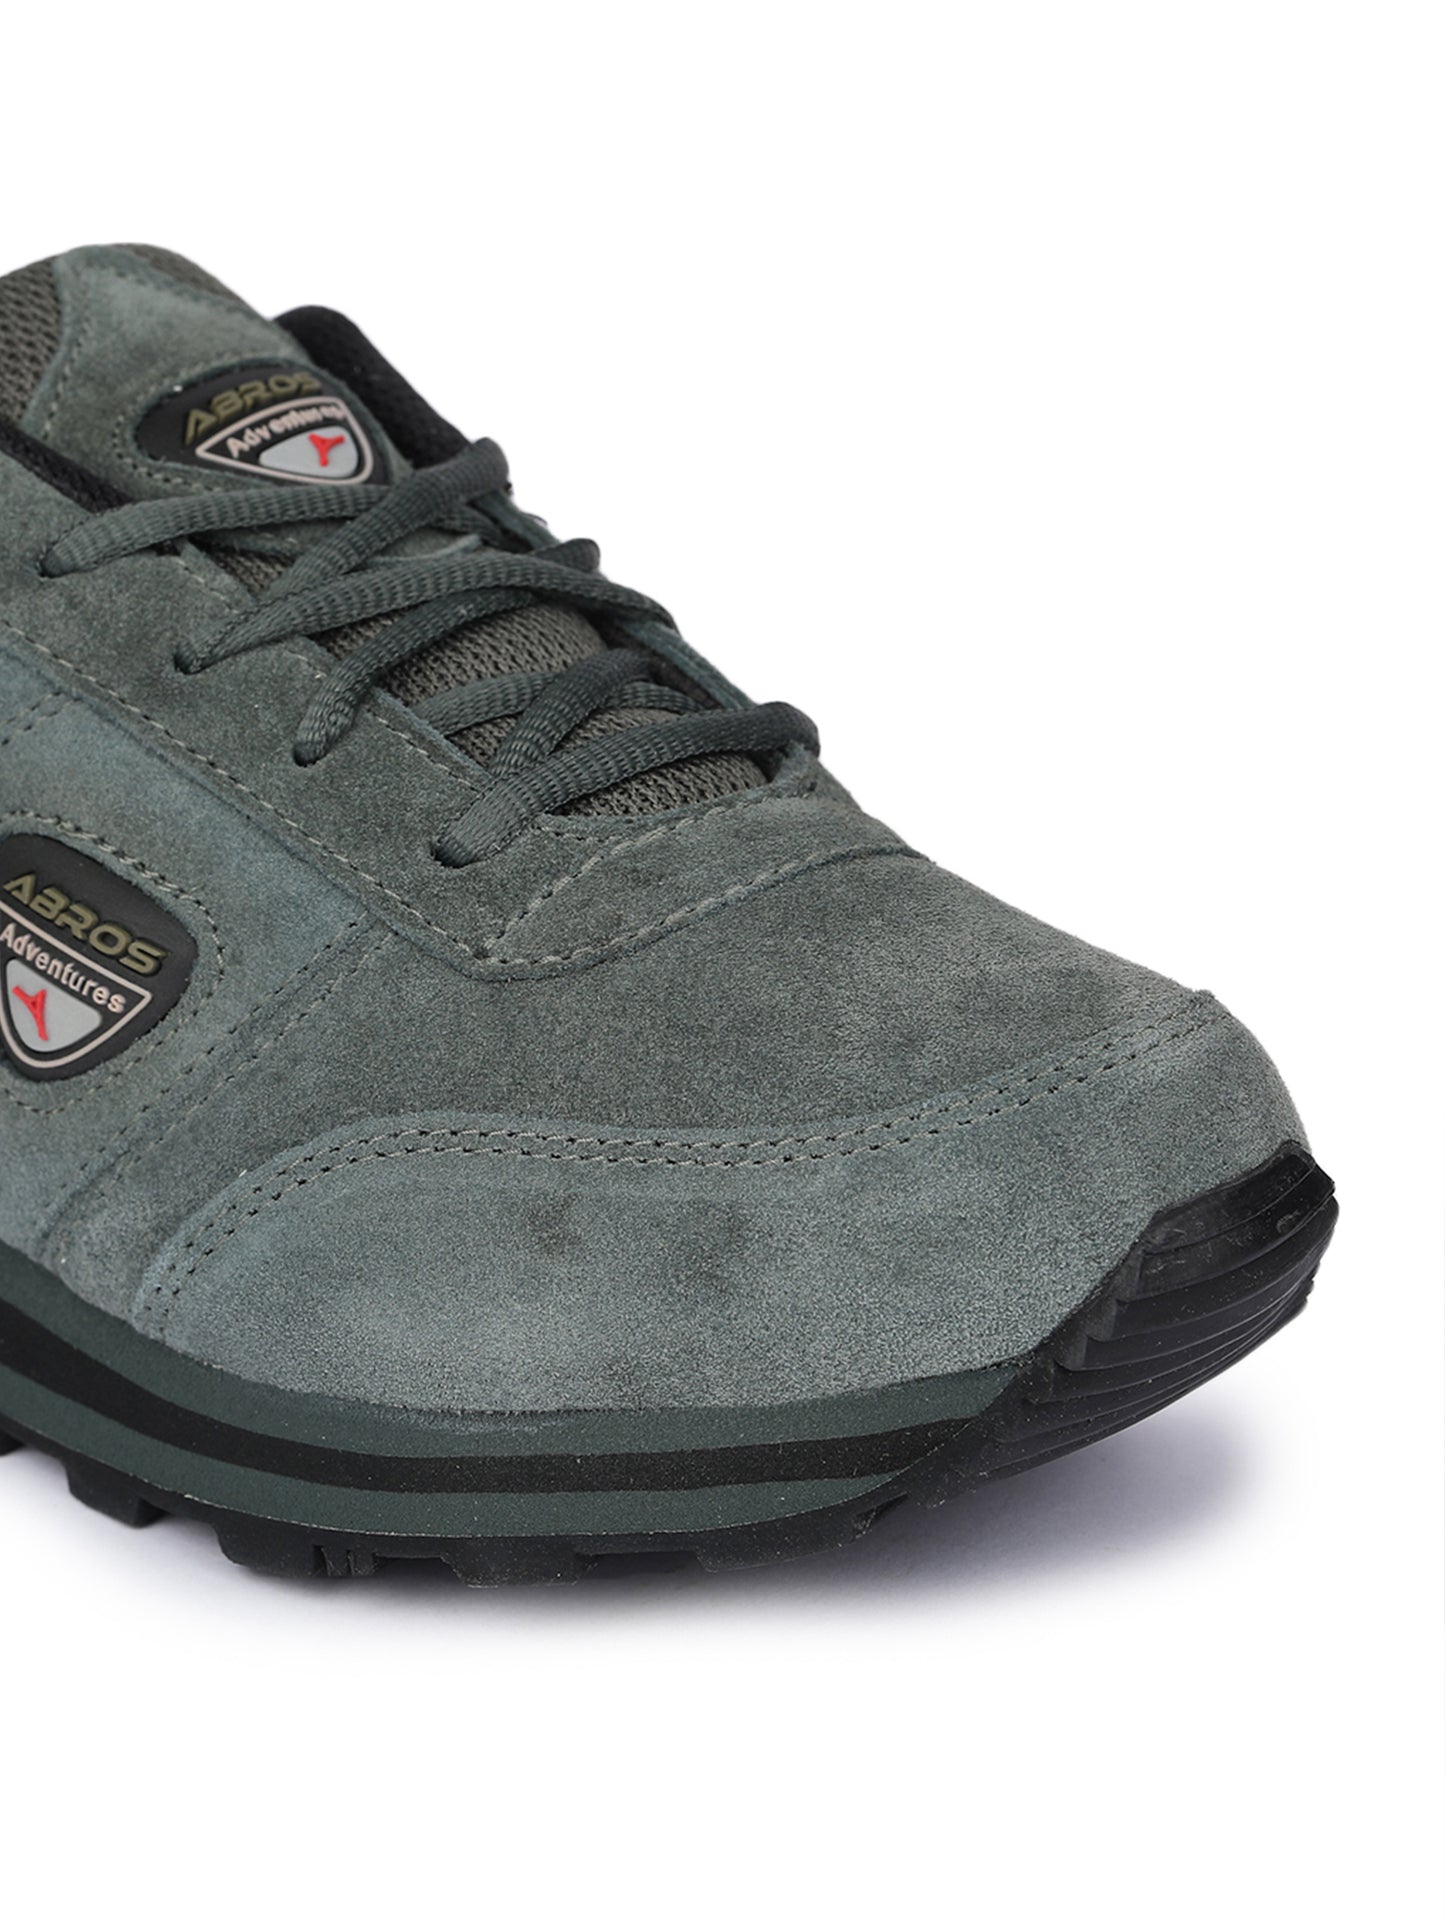 Jogger-1O Outdoor-Shoes For Men's